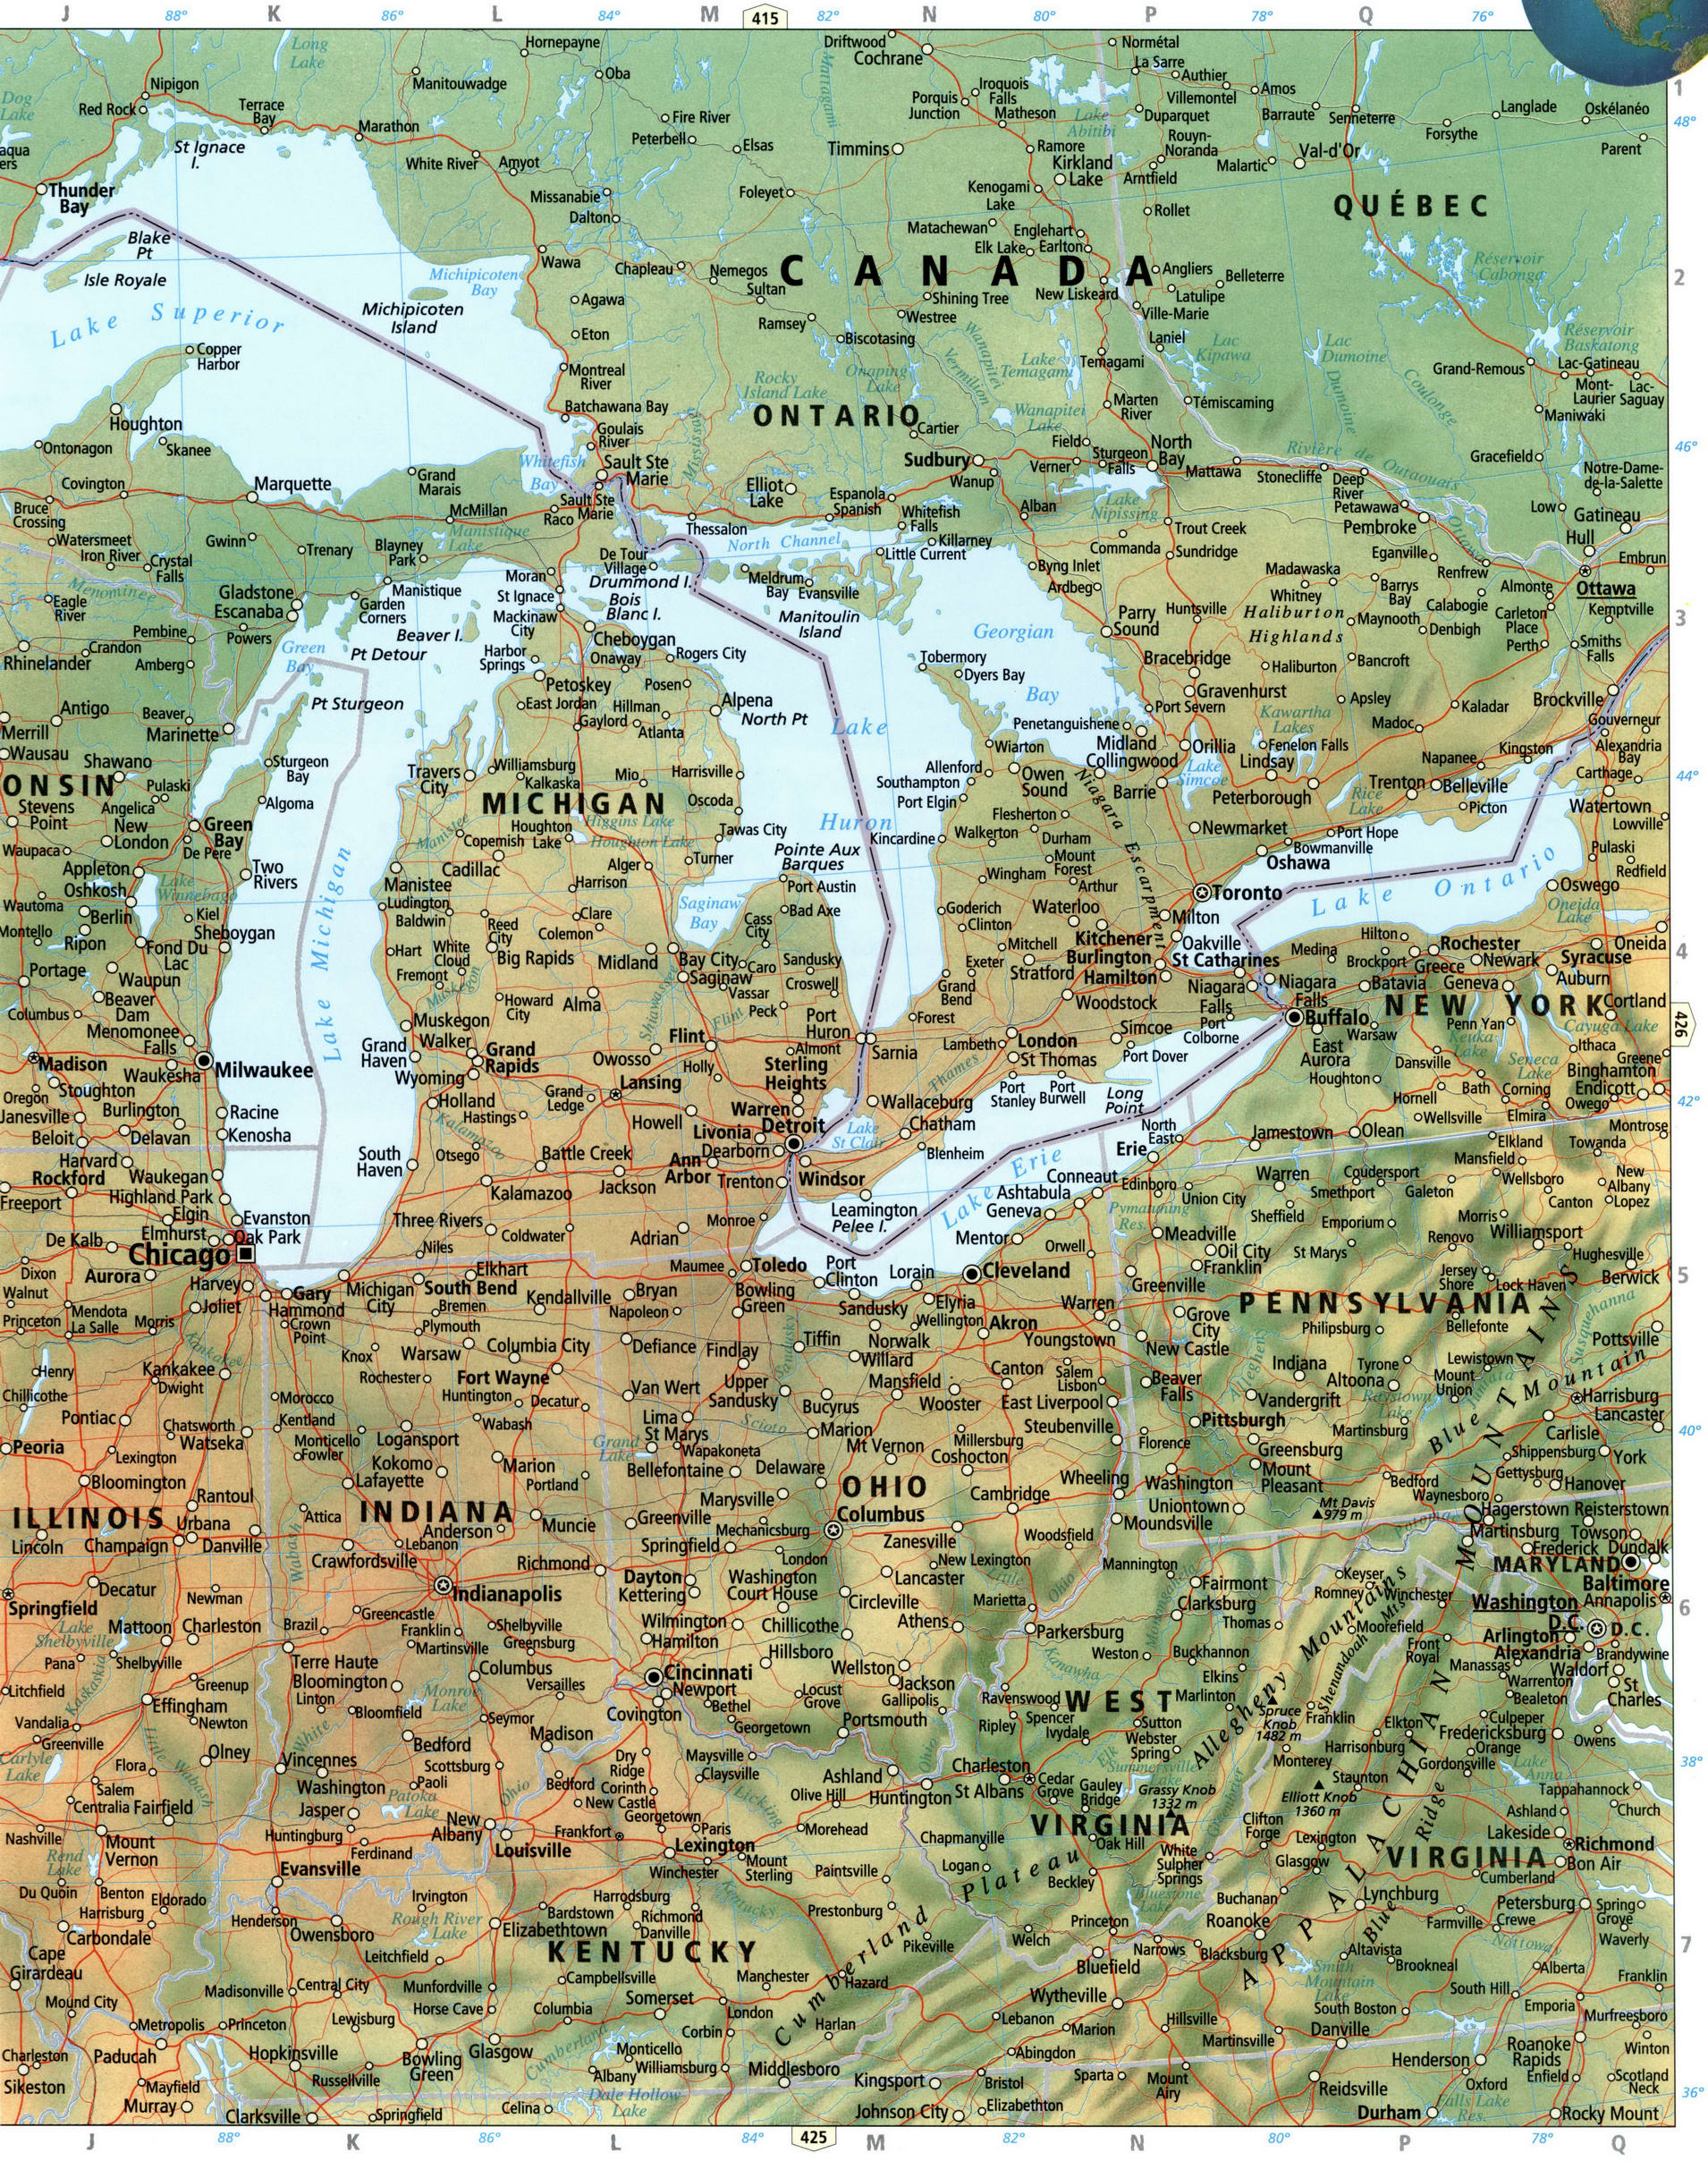 Michigan and Illinois map